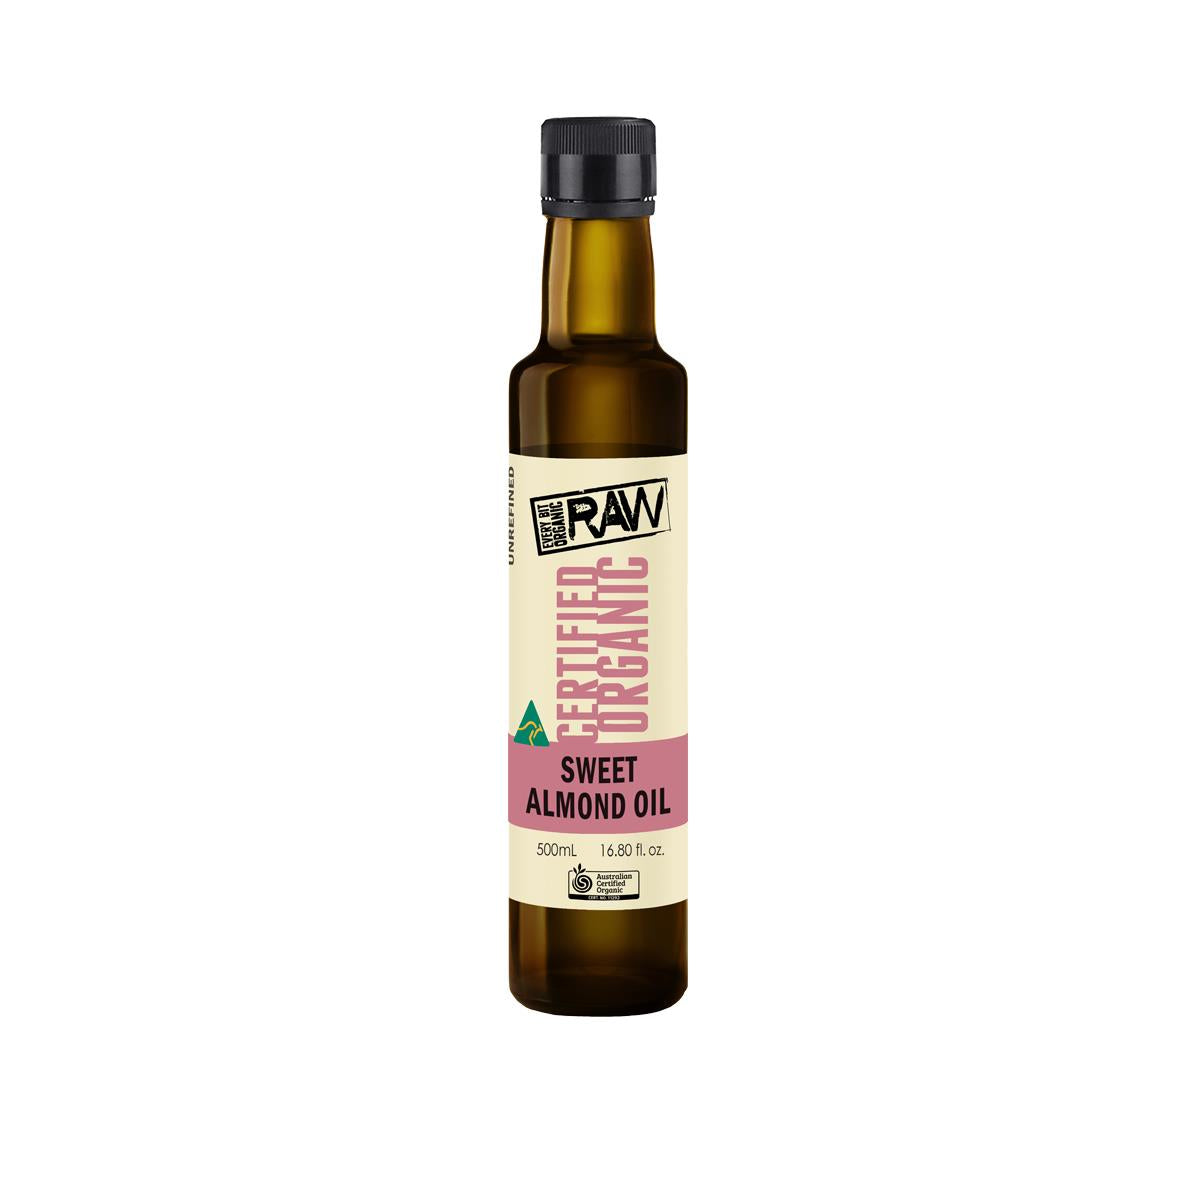 Every Bit Organic Sweet Almond Oil 250ml-The Living Co.